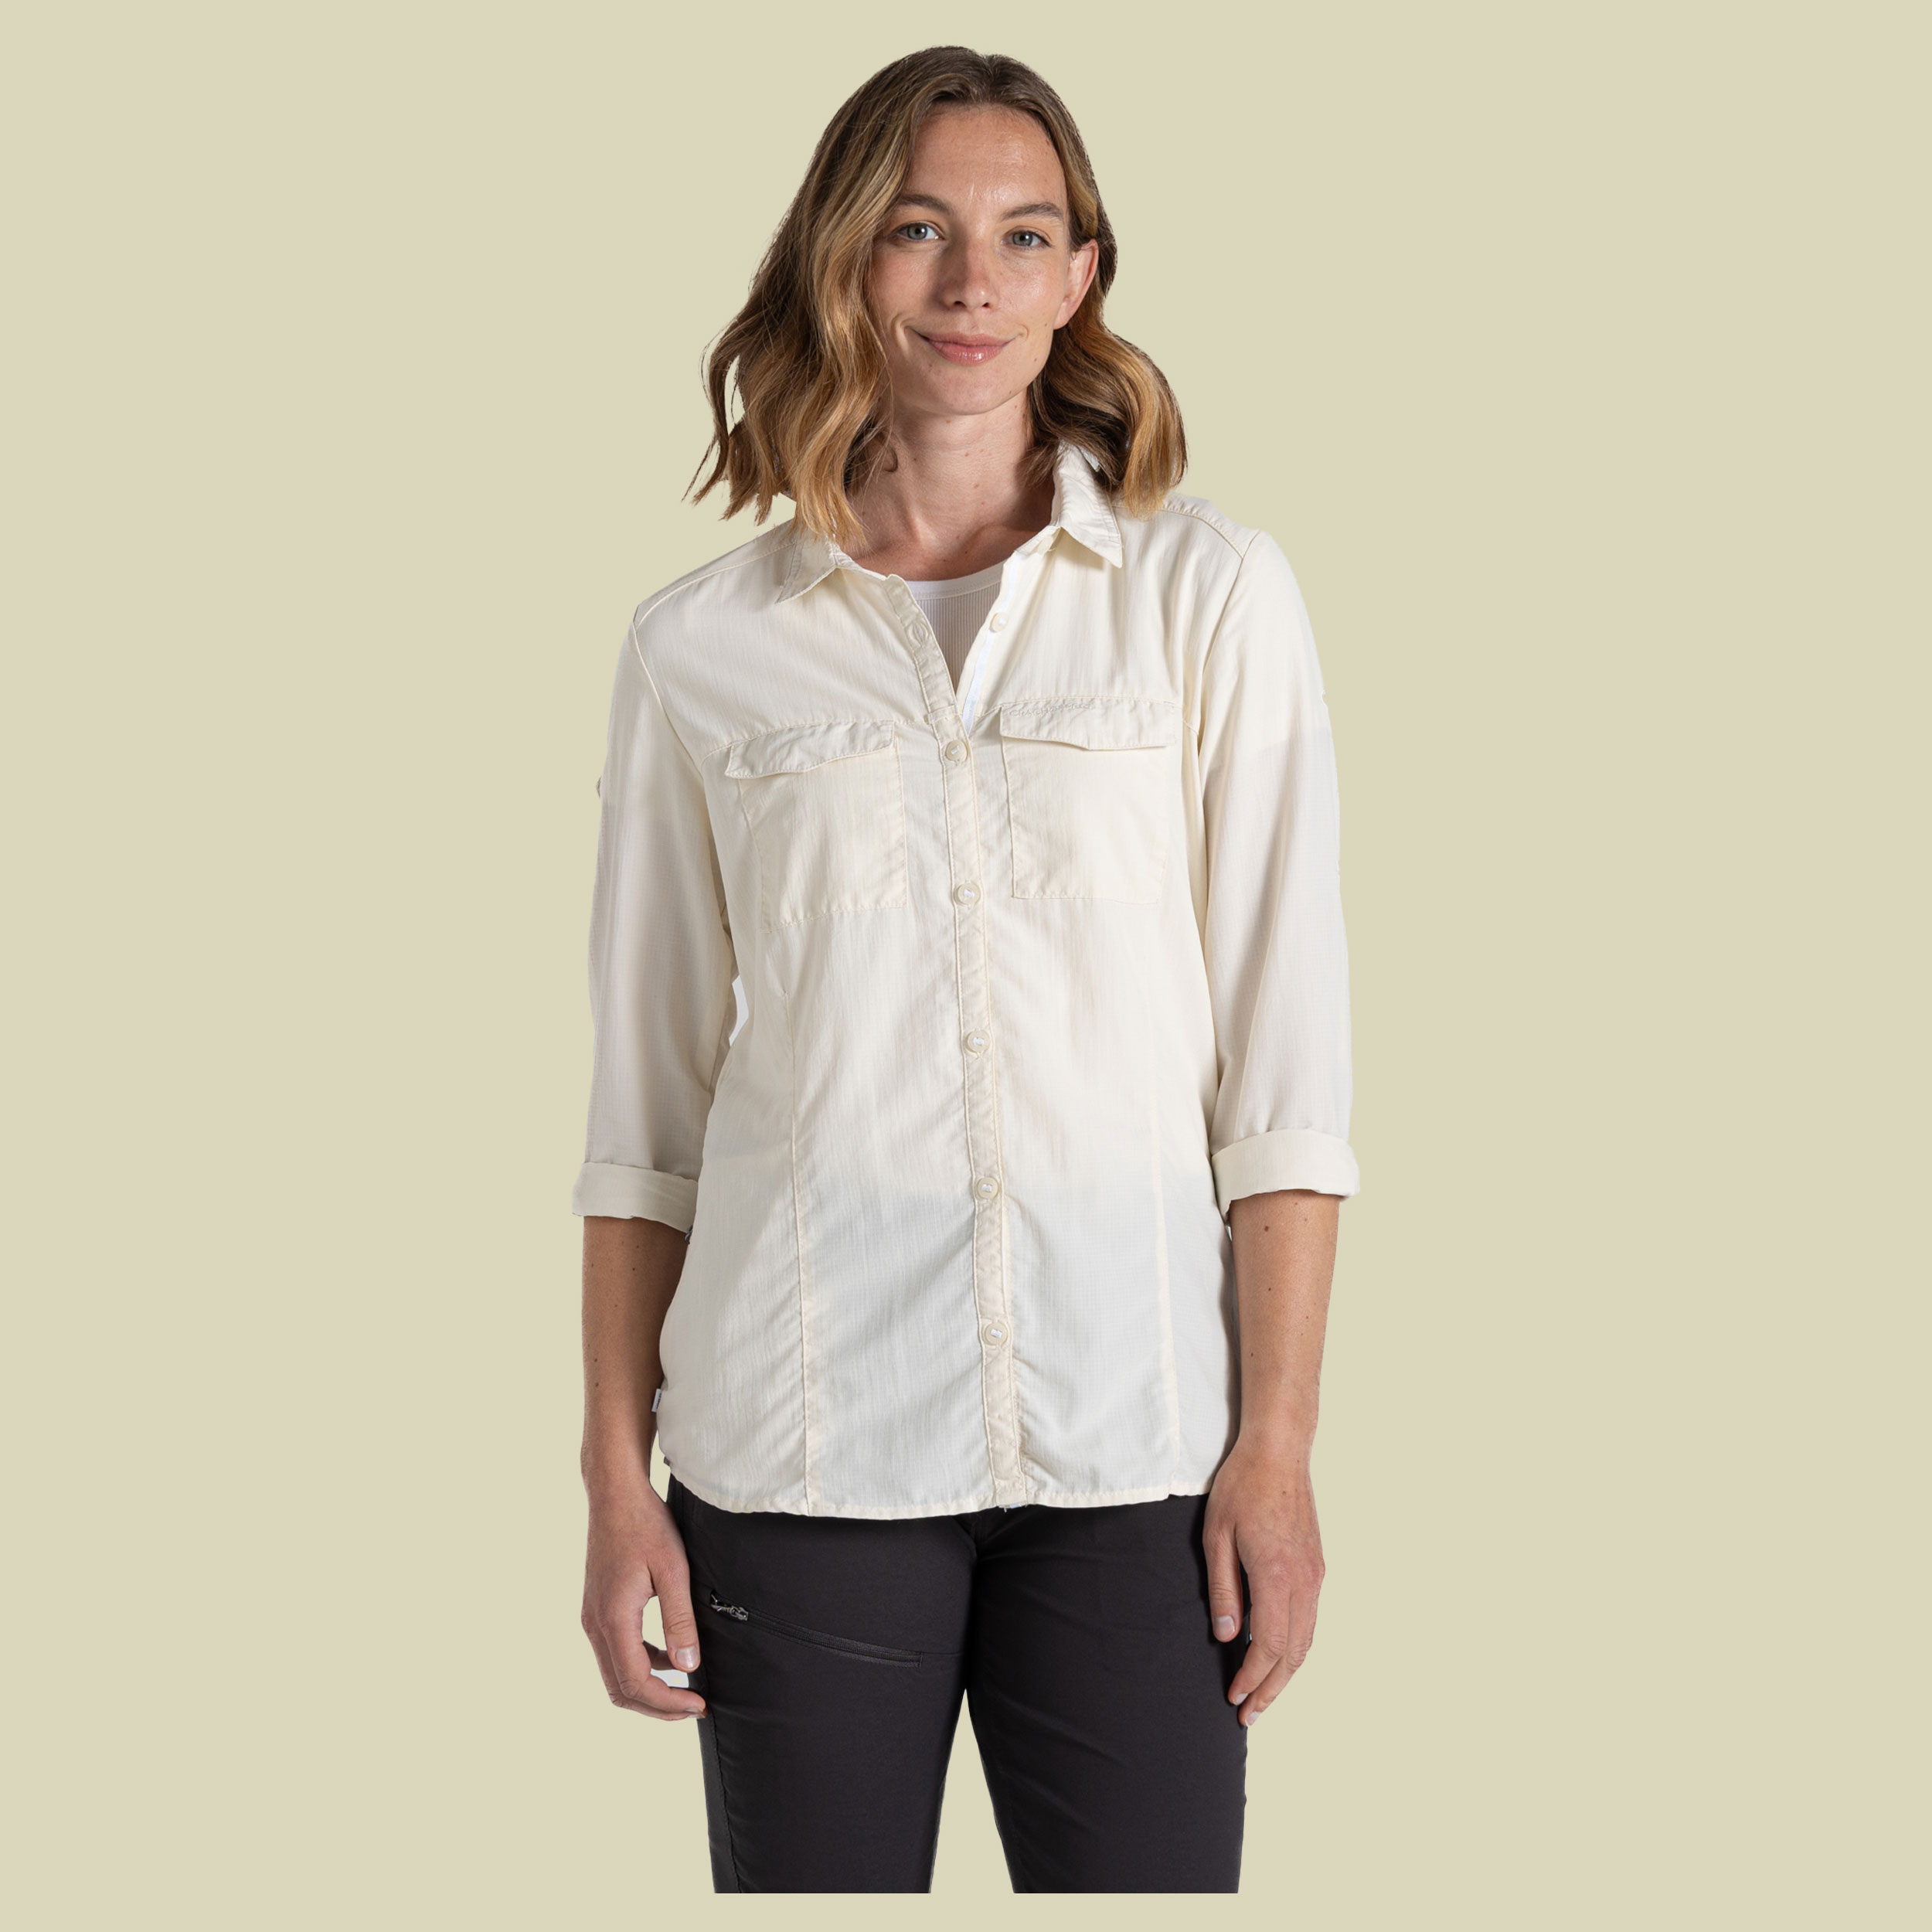 NosiLife Adventure Long Sleeved Shirt III Women 44 beige -sea salt (UK 18)